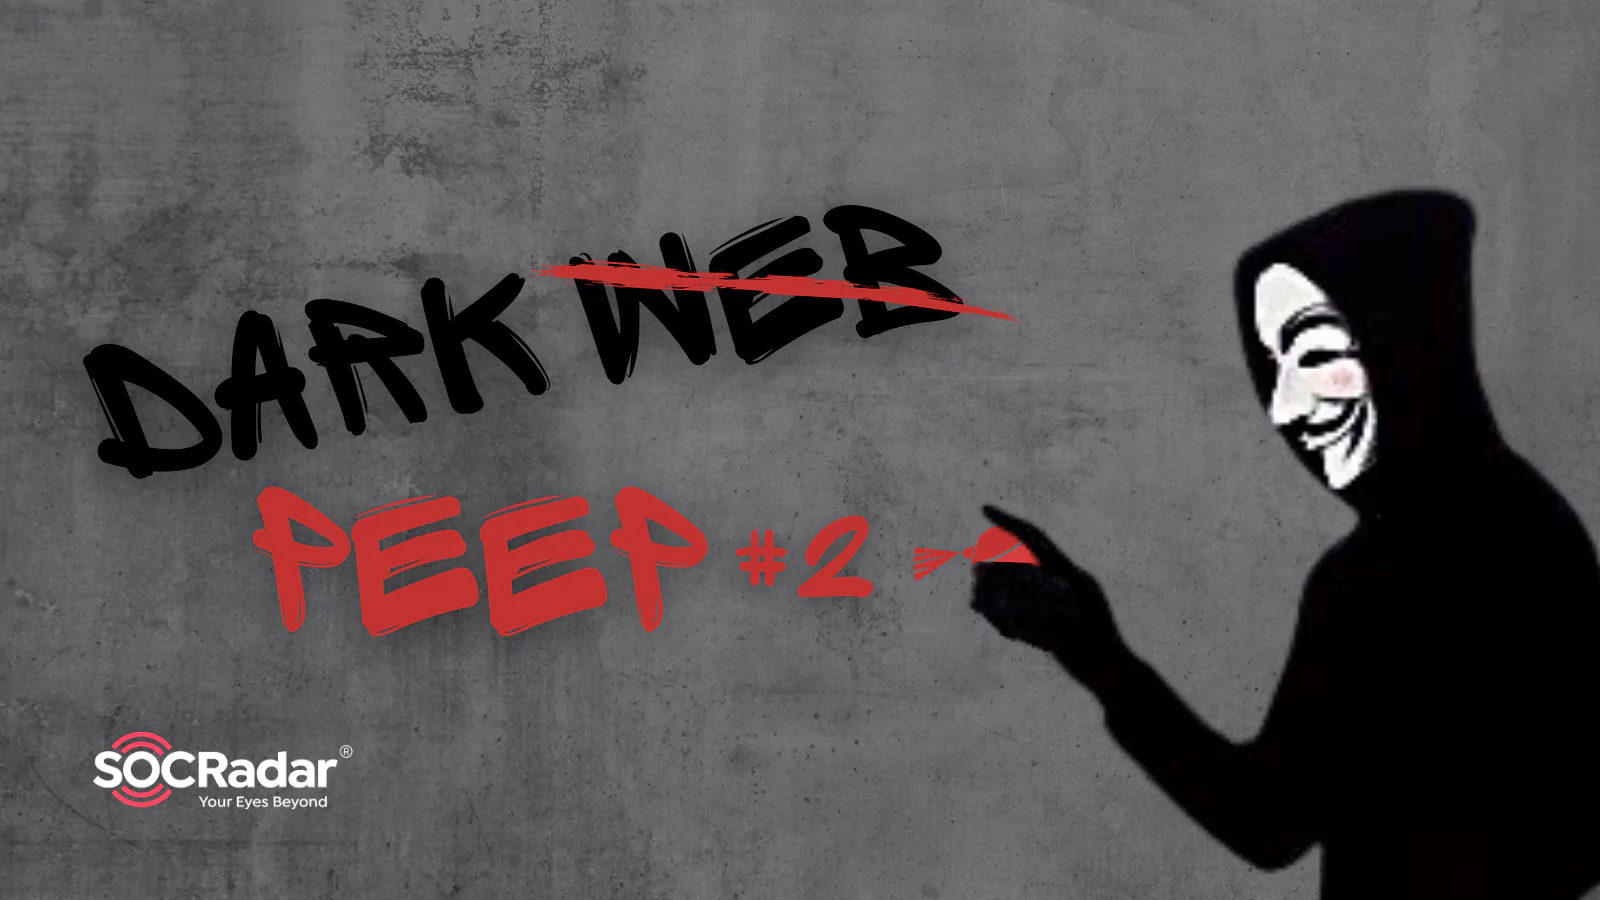 SOCRadar® Cyber Intelligence Inc. | Dark Peep #2: War and a Piece of Hilarity